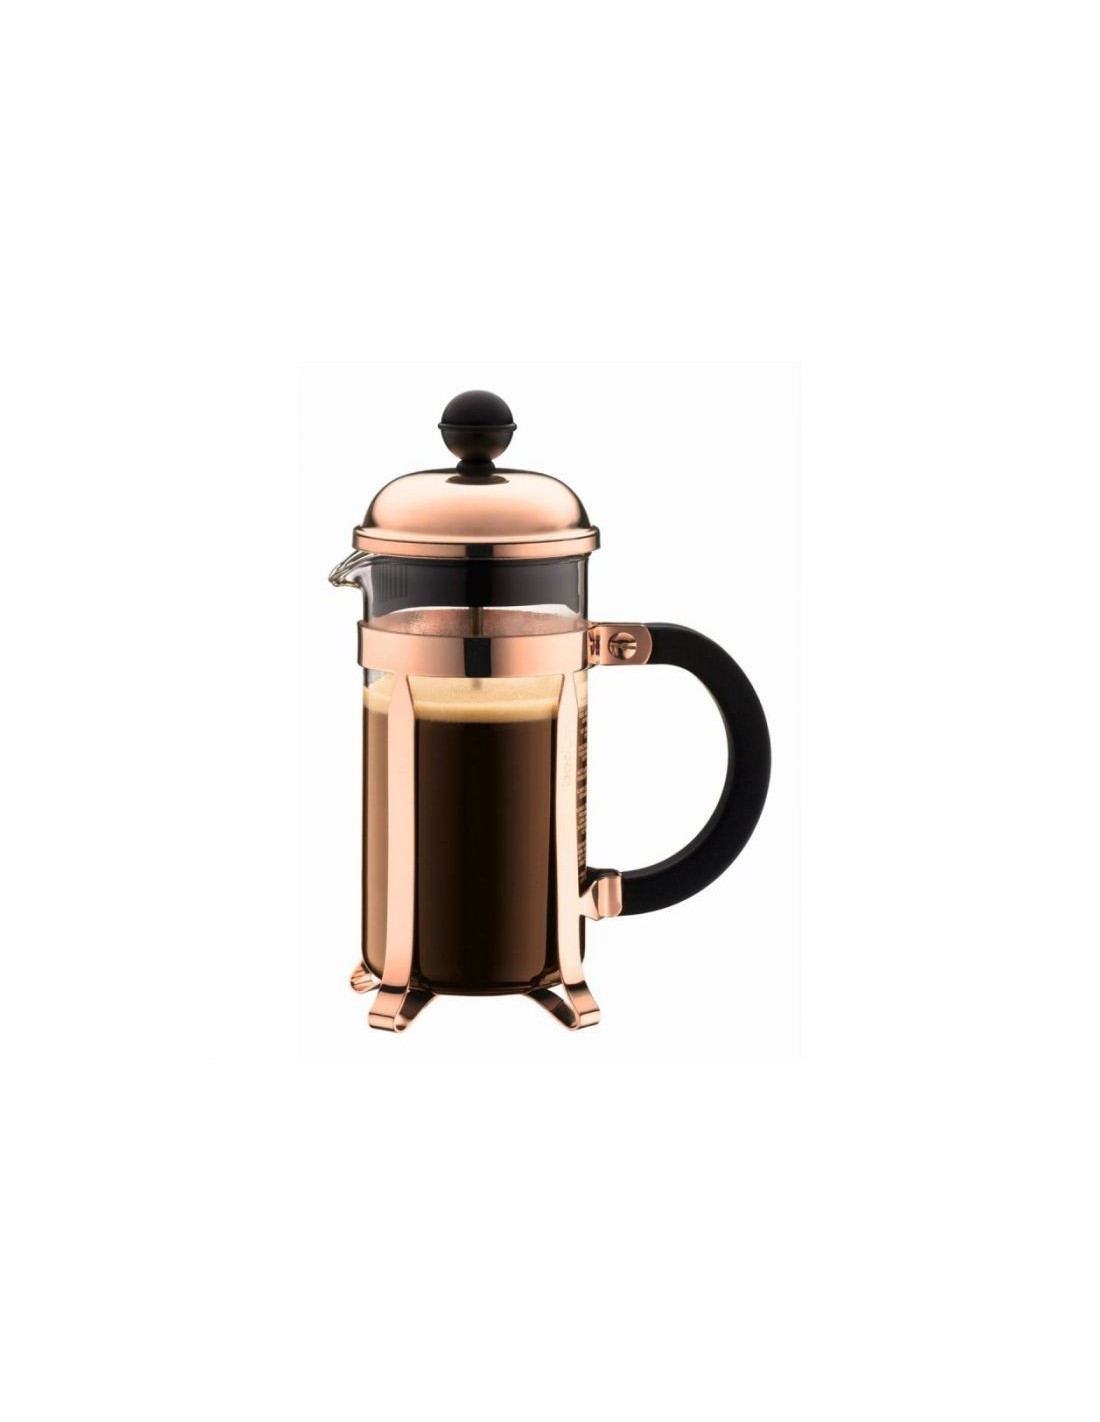 https://www.cafeteq.com/43-thickbox_default/bodum-chambord-coffee-maker-3-cup-035l-12oz-glass-copper-lid.jpg